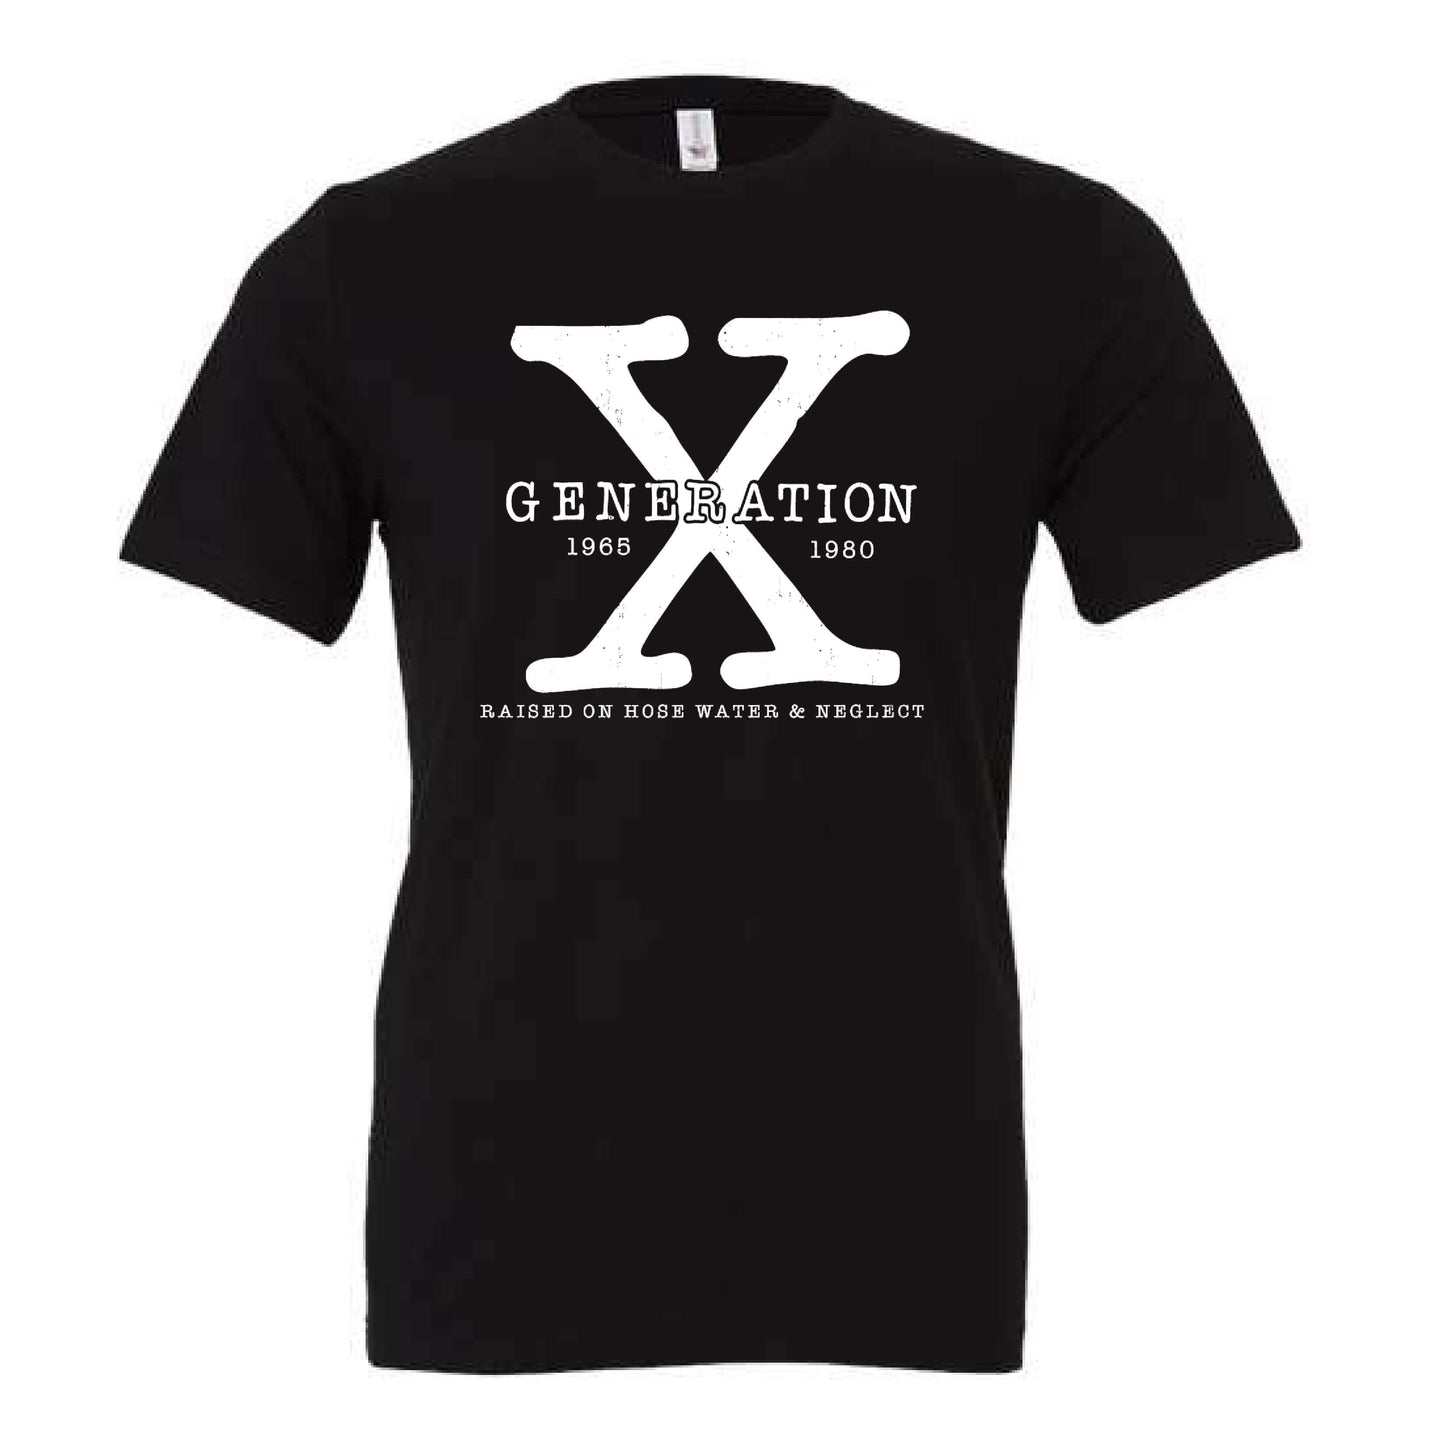 Generation X white lettering